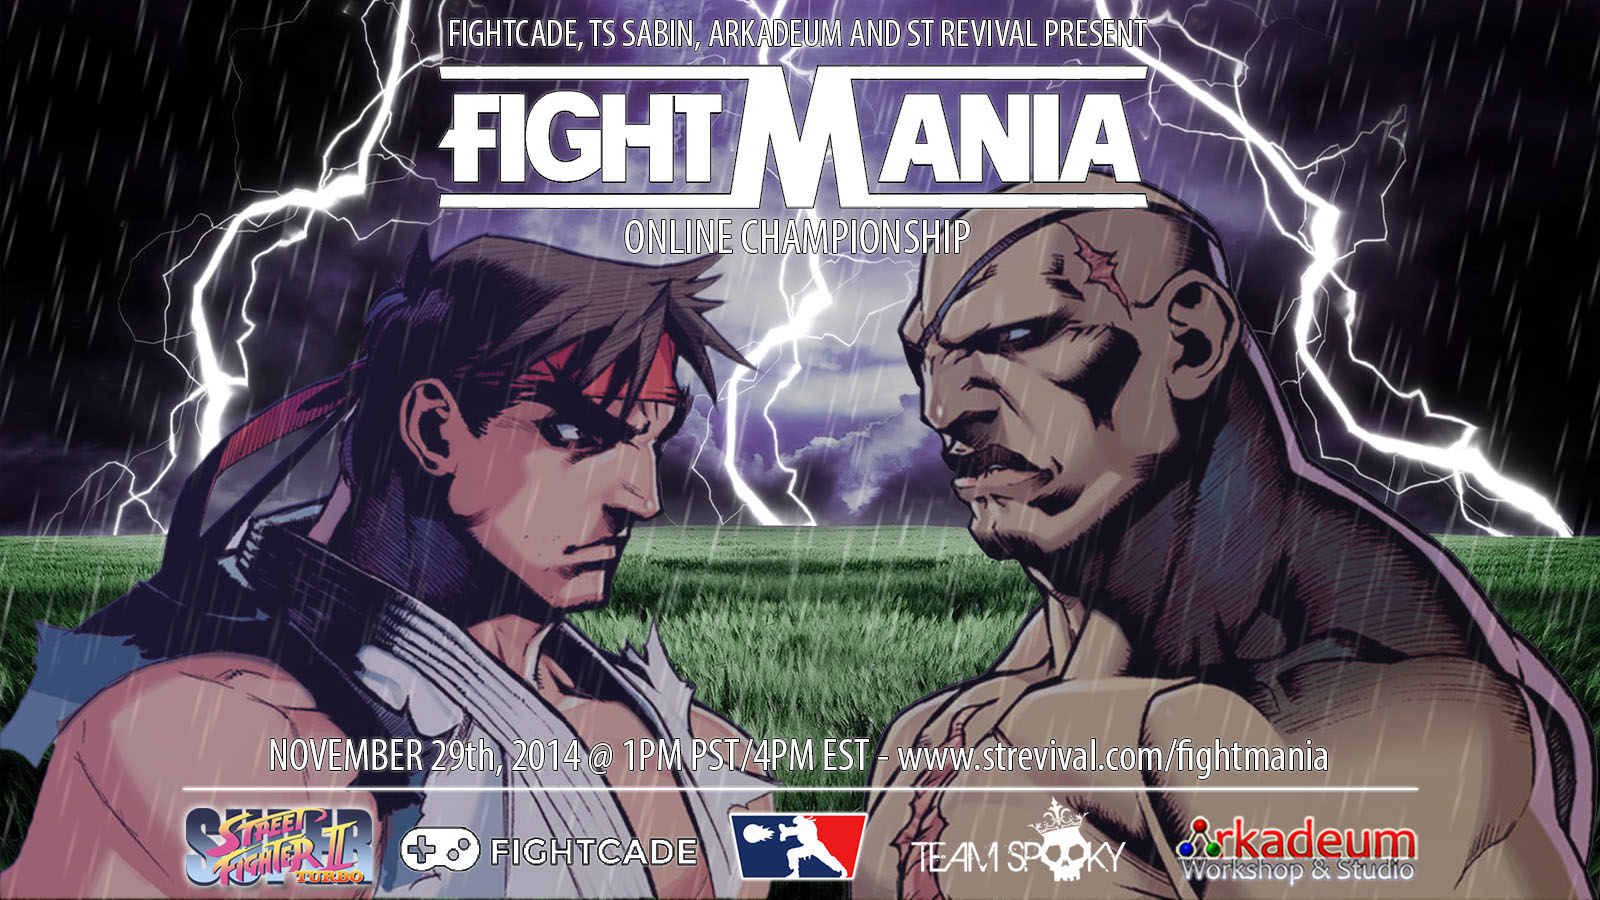 FightMania tournament promotion